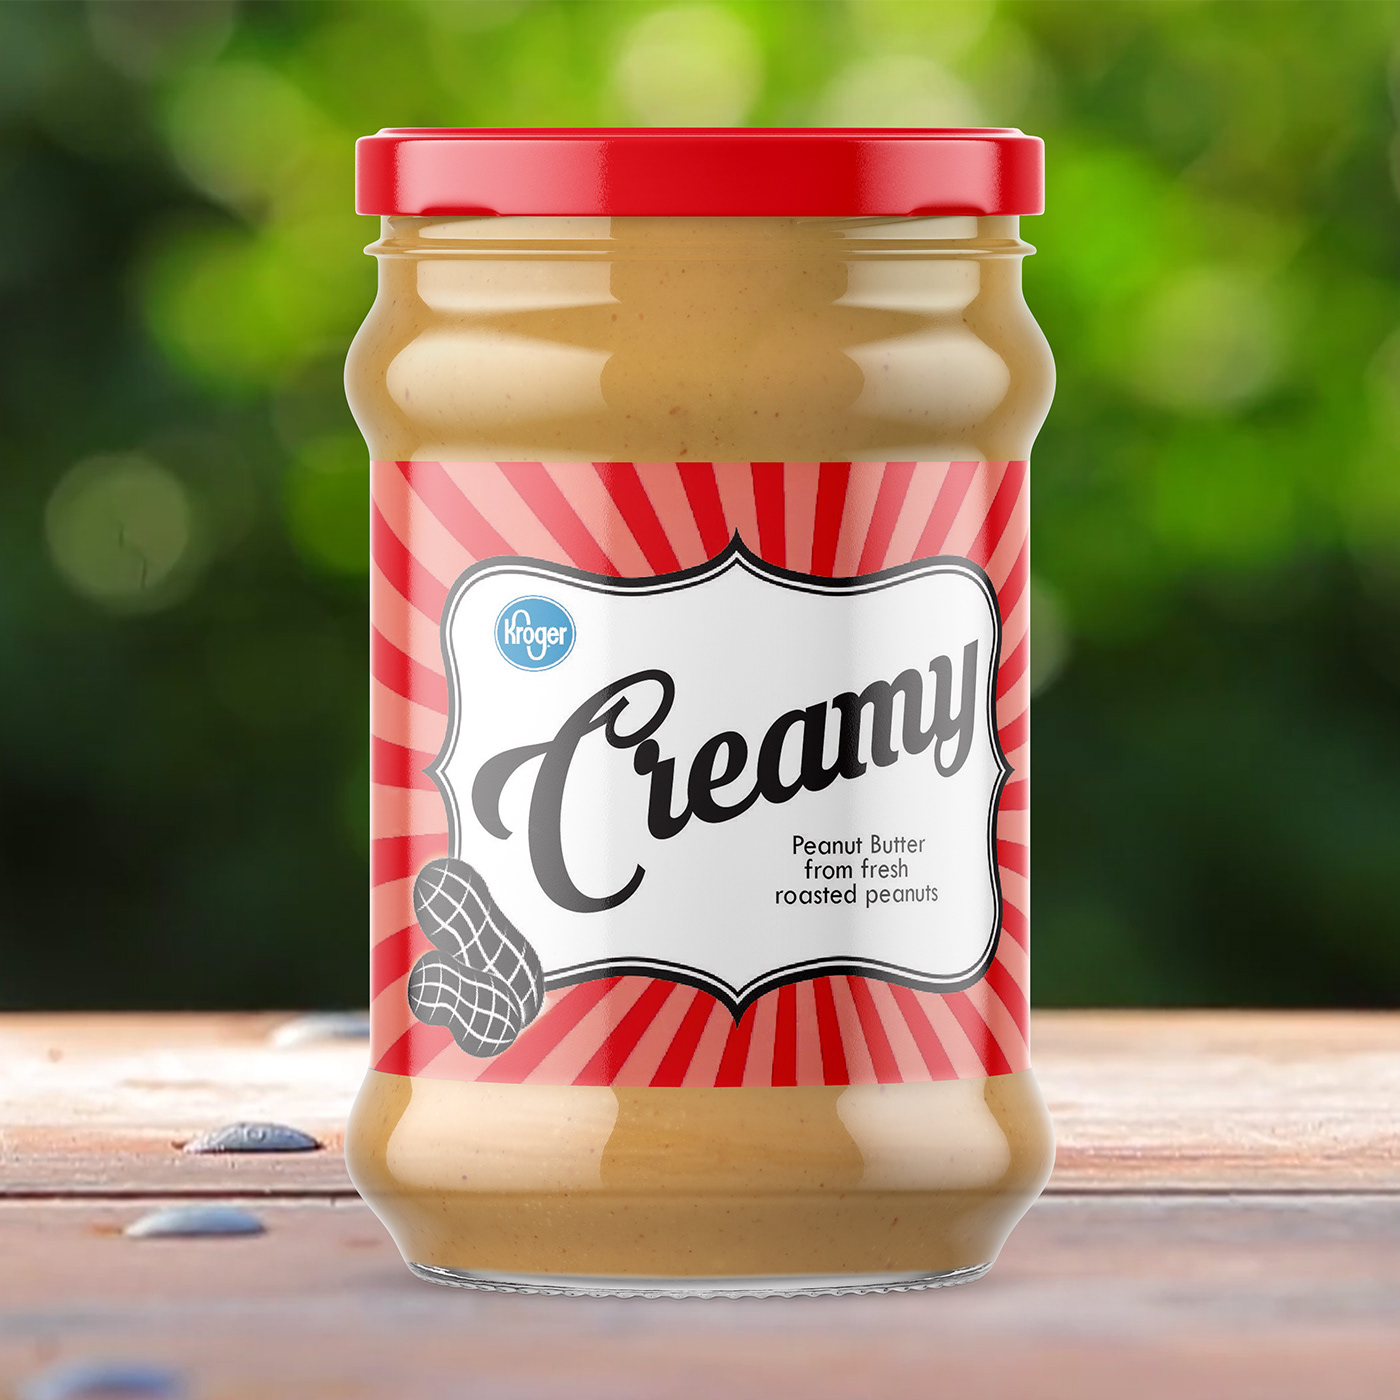 Peanut Butter Label Redesign. 